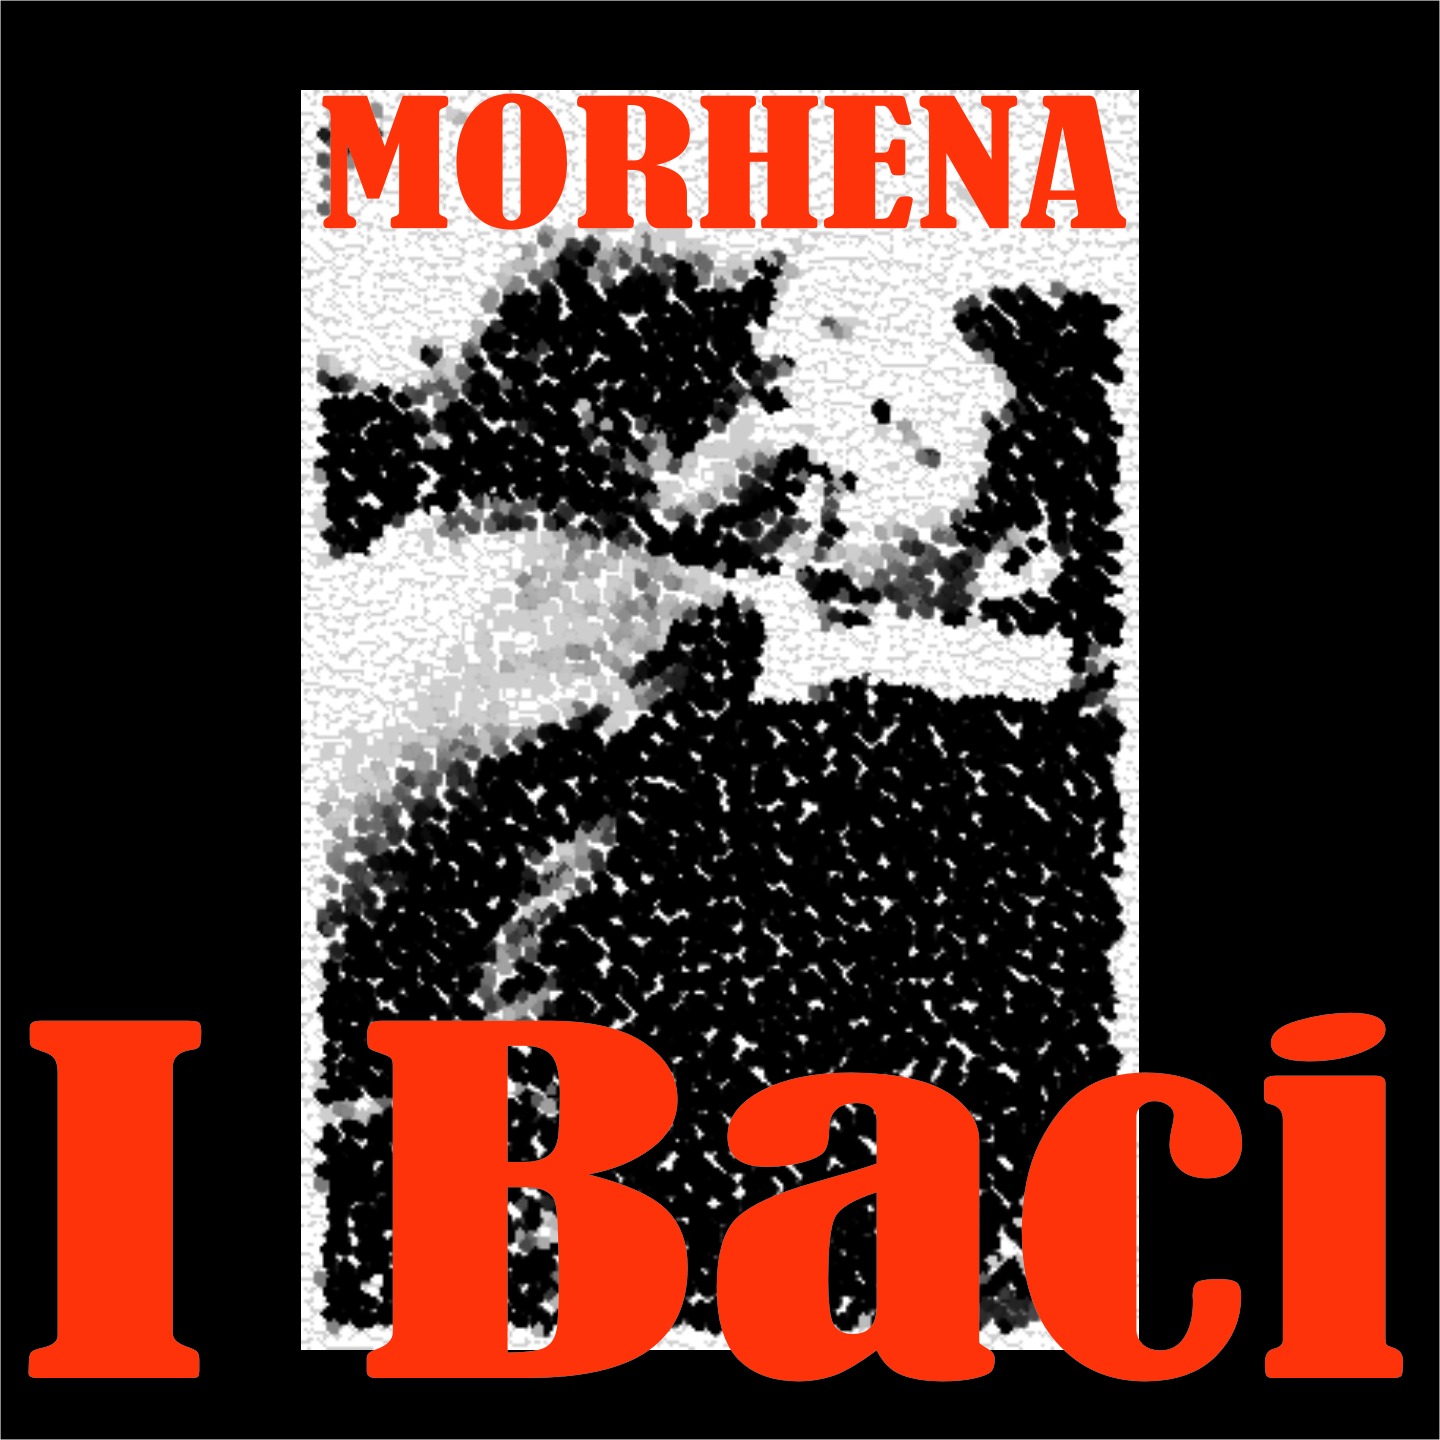 Morhena “I BACI”